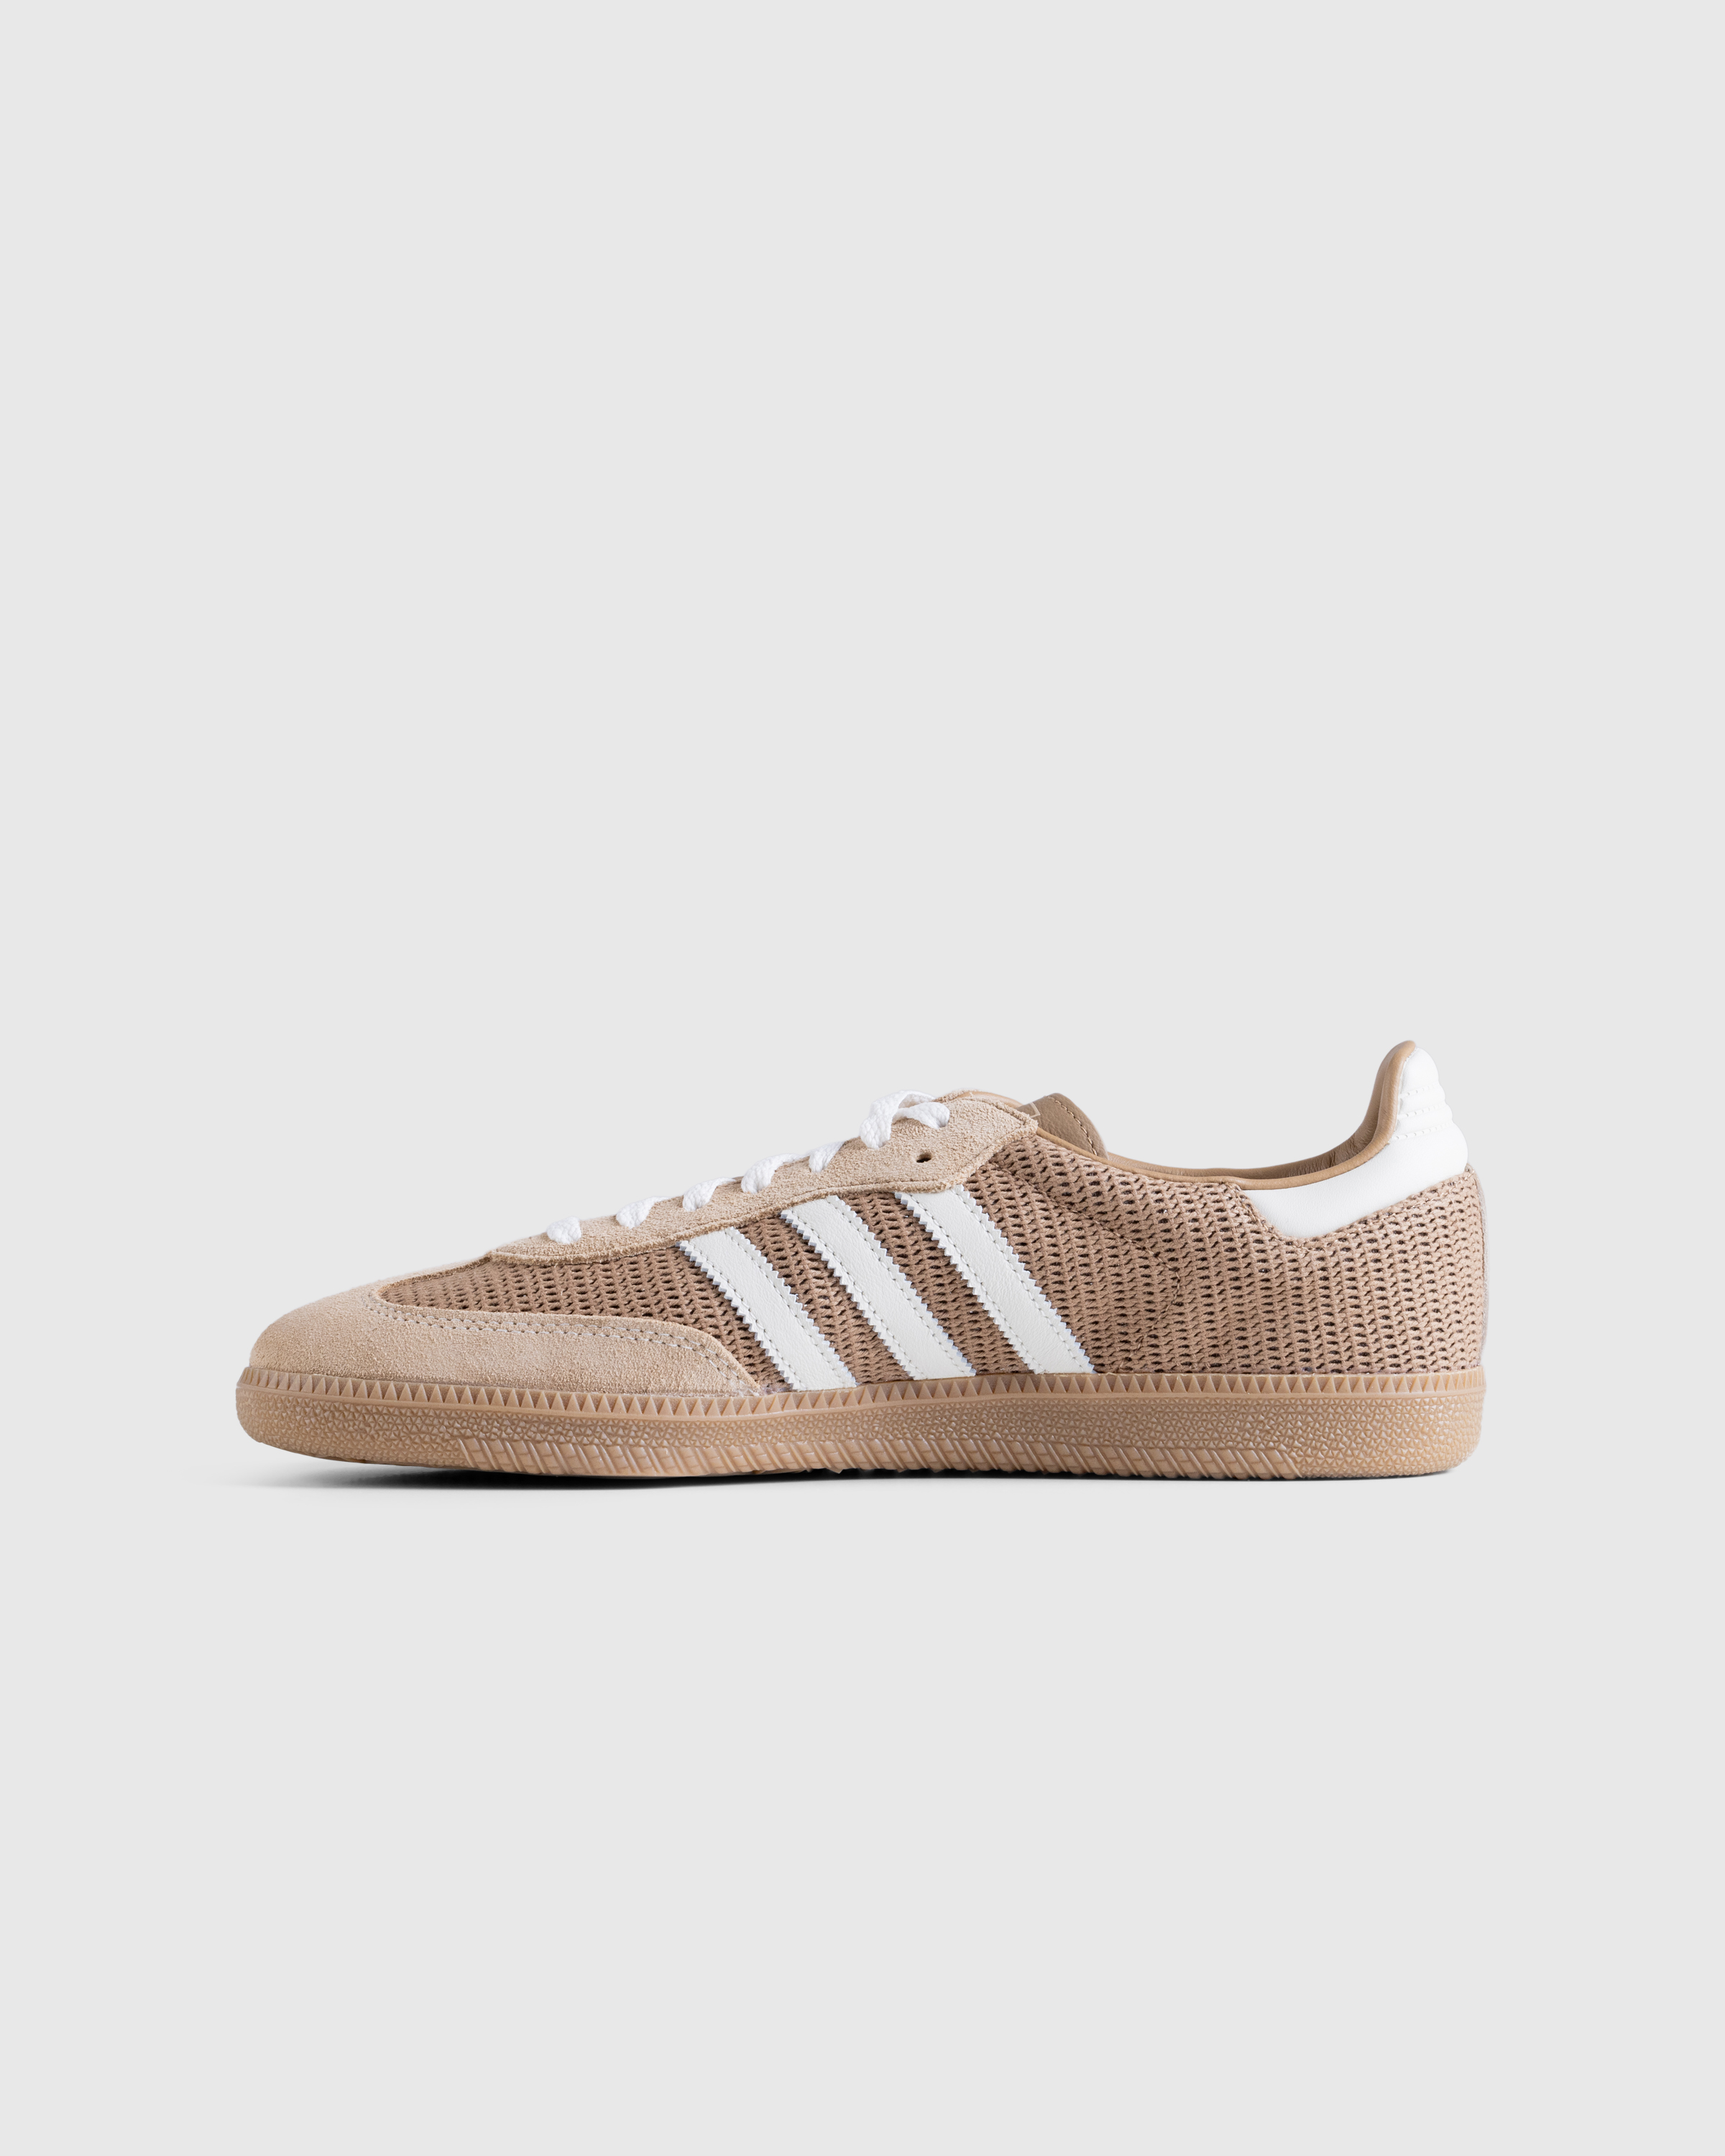 Adidas – Samba OG Cardboard - Sneakers - Brown - Image 2